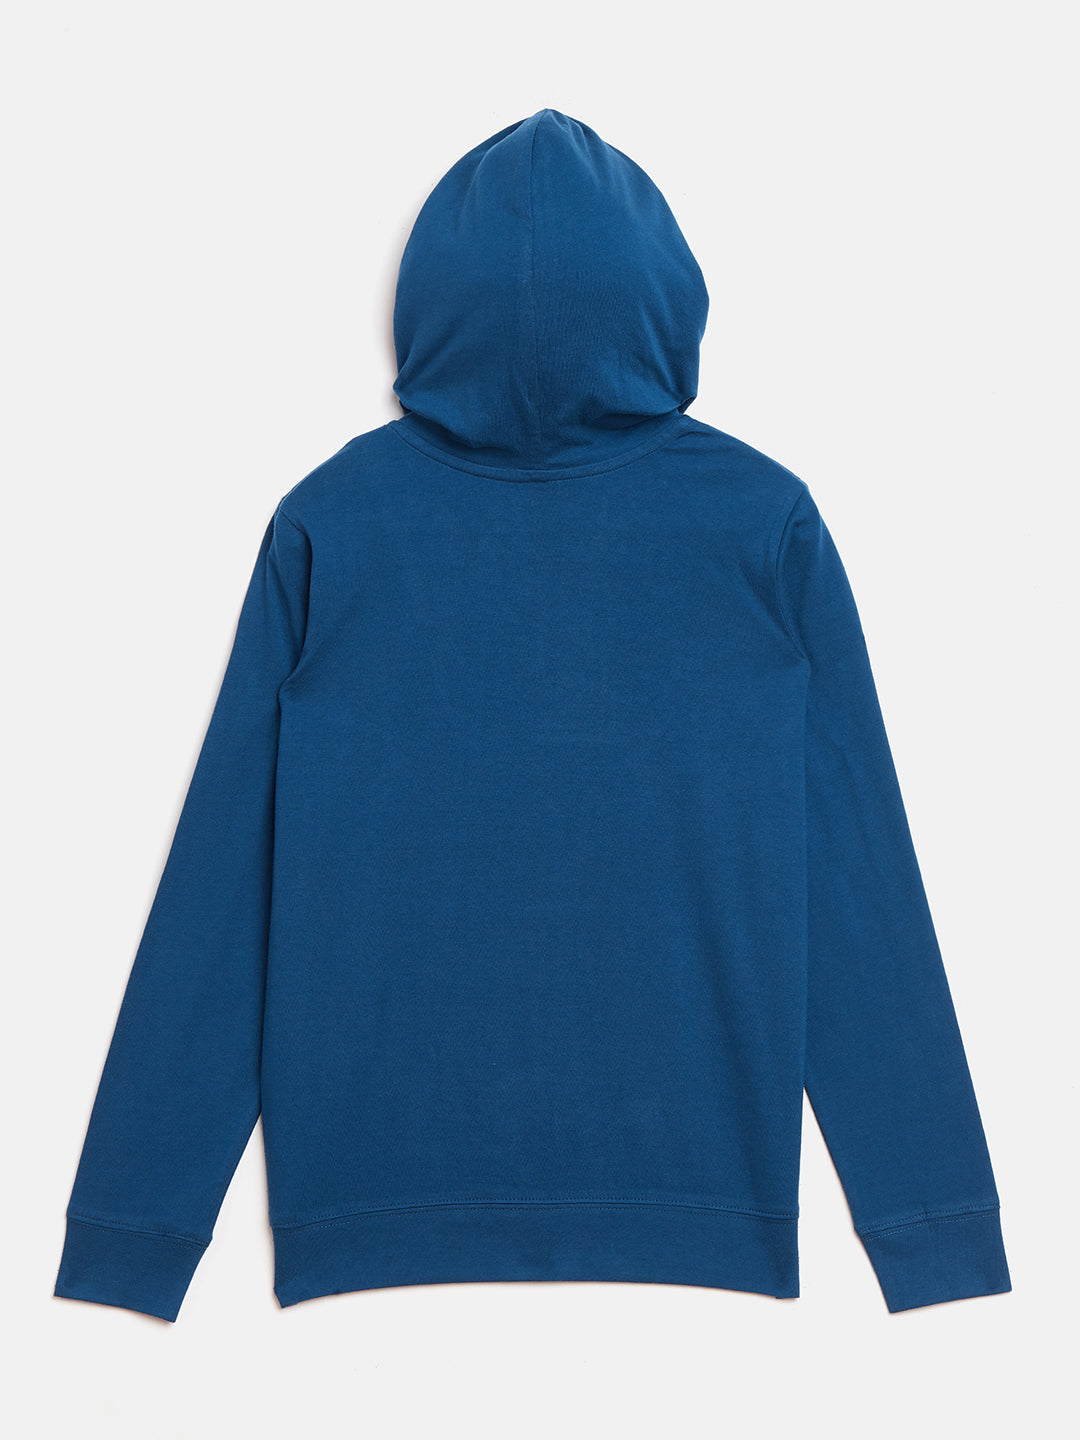 Indigo/Grey Melange Kids Full Sleeves Hooded T-Shirt